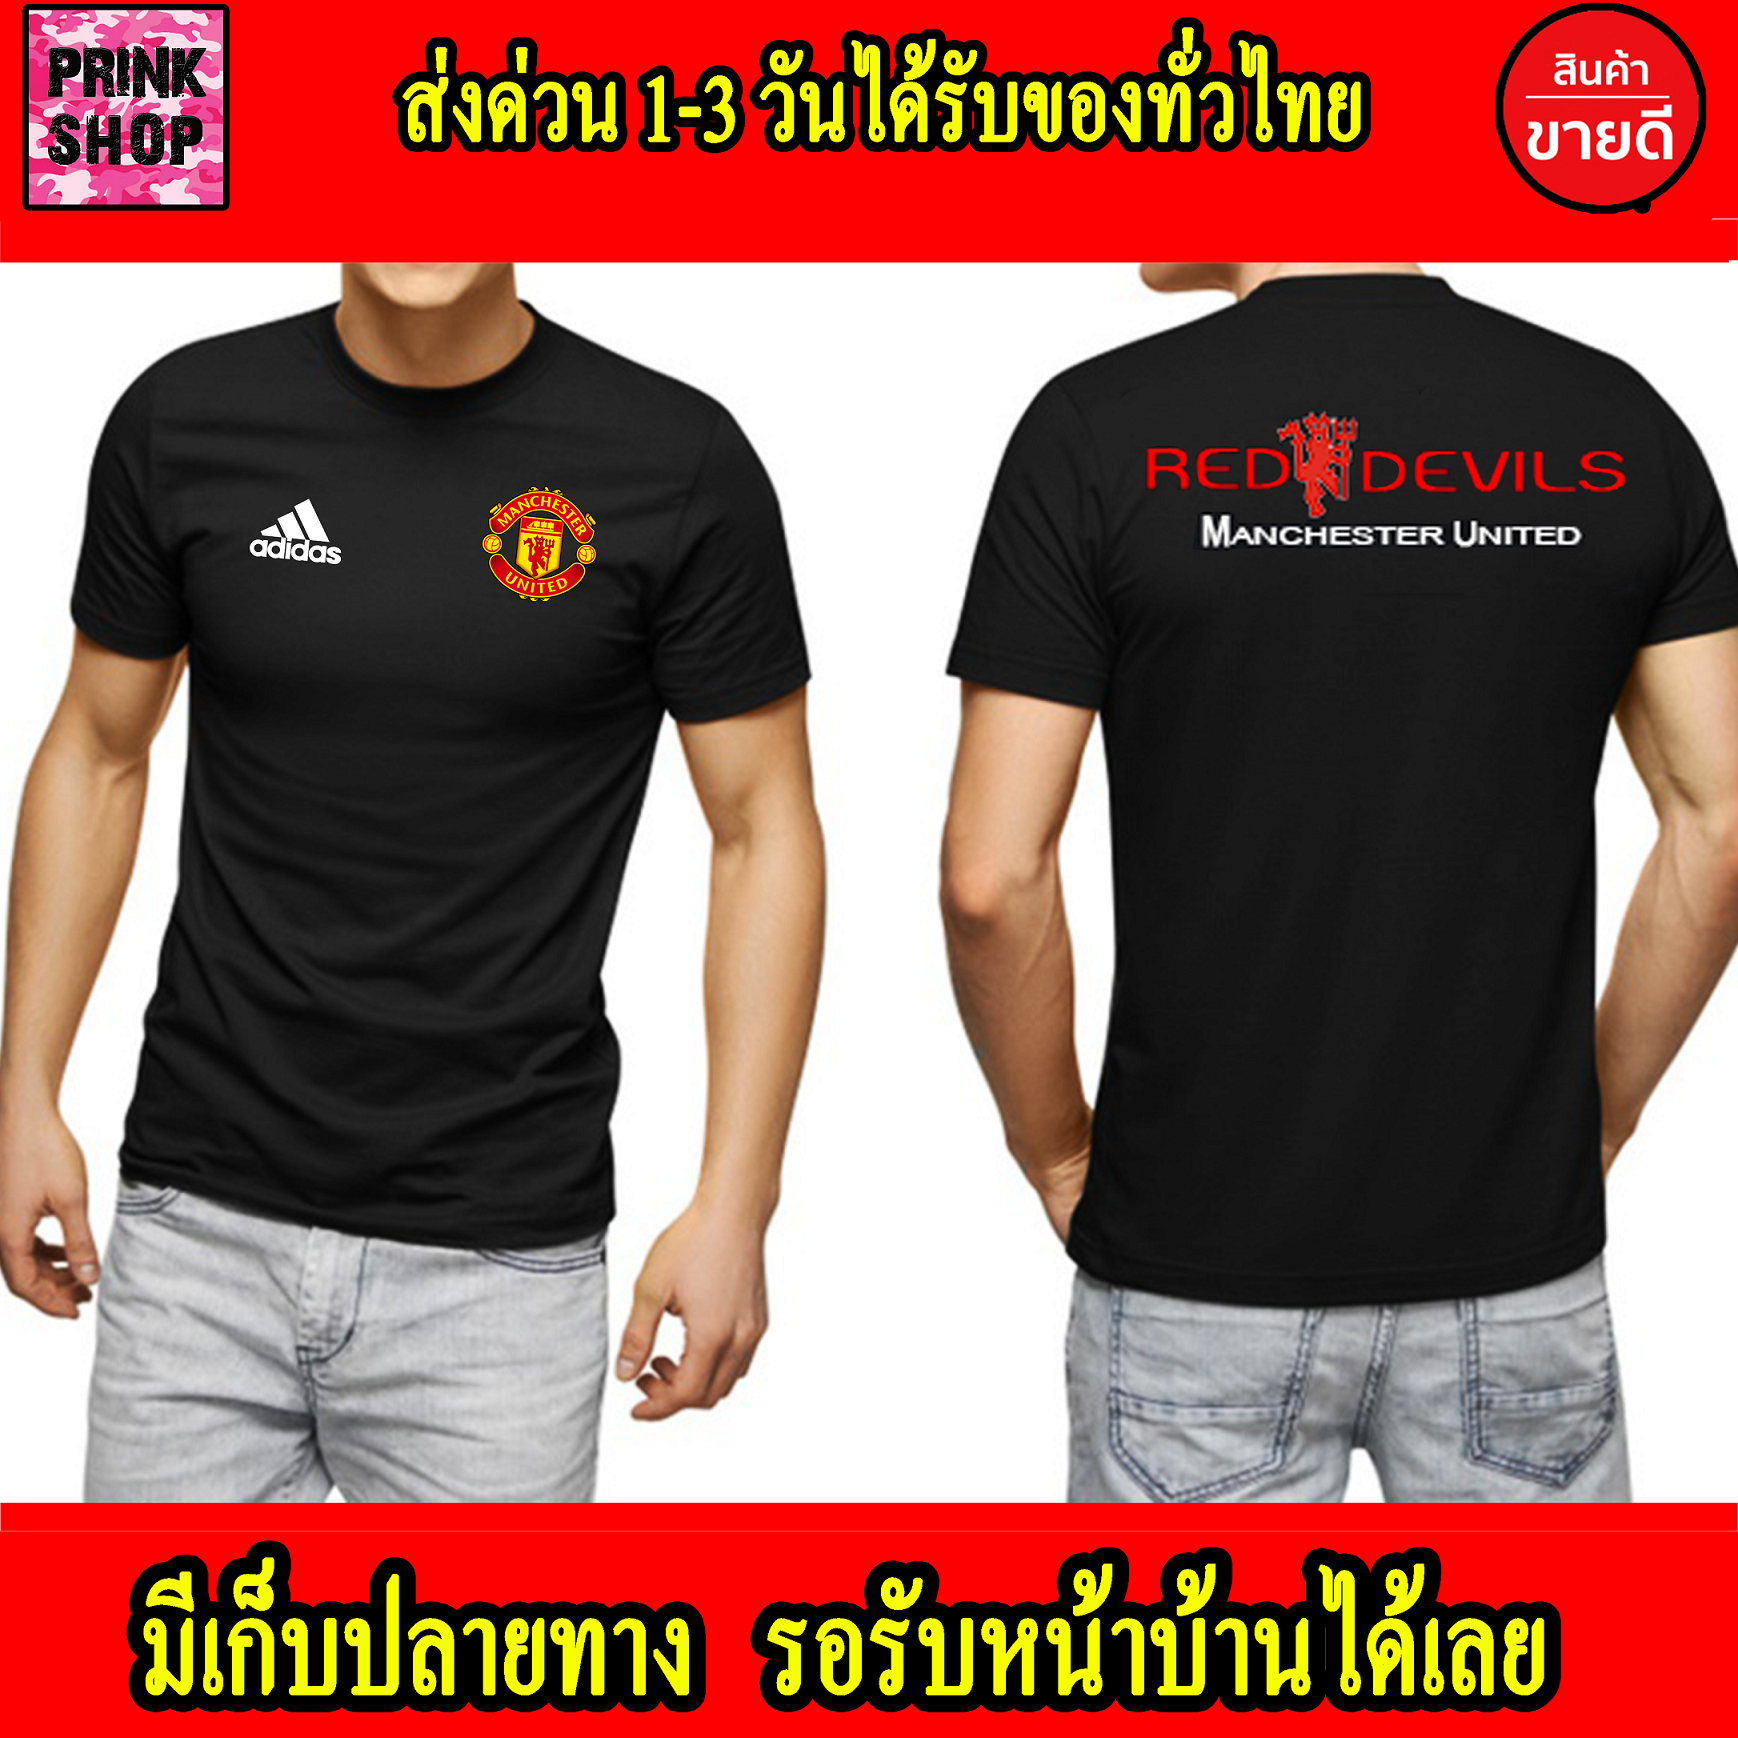 Man U เสื้อยืด Manchester United แมนเชสเตอร์ ยูไนเต็ด ถูกที่สุด แมนยู ส่งด่วนทั่วไทย งานดี Cotton 100% สกรีนแบบเฟล็ก PU สวยสดไม่แตกไม่ลอก